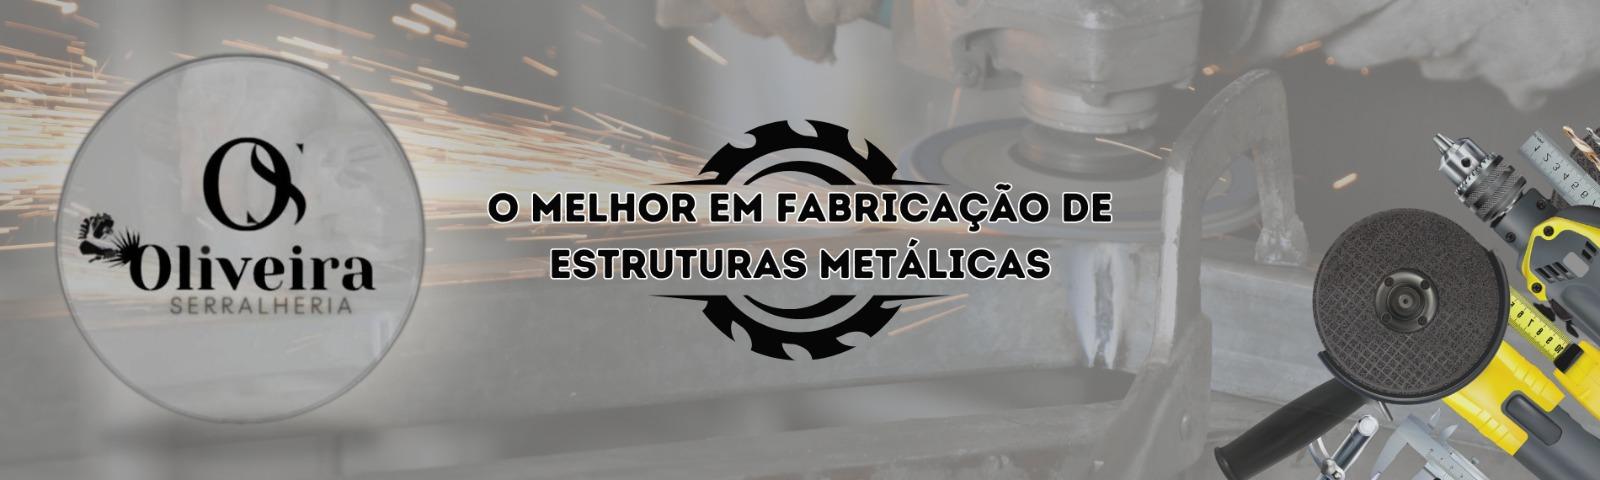 banner da empresa Oliveira Serralheria